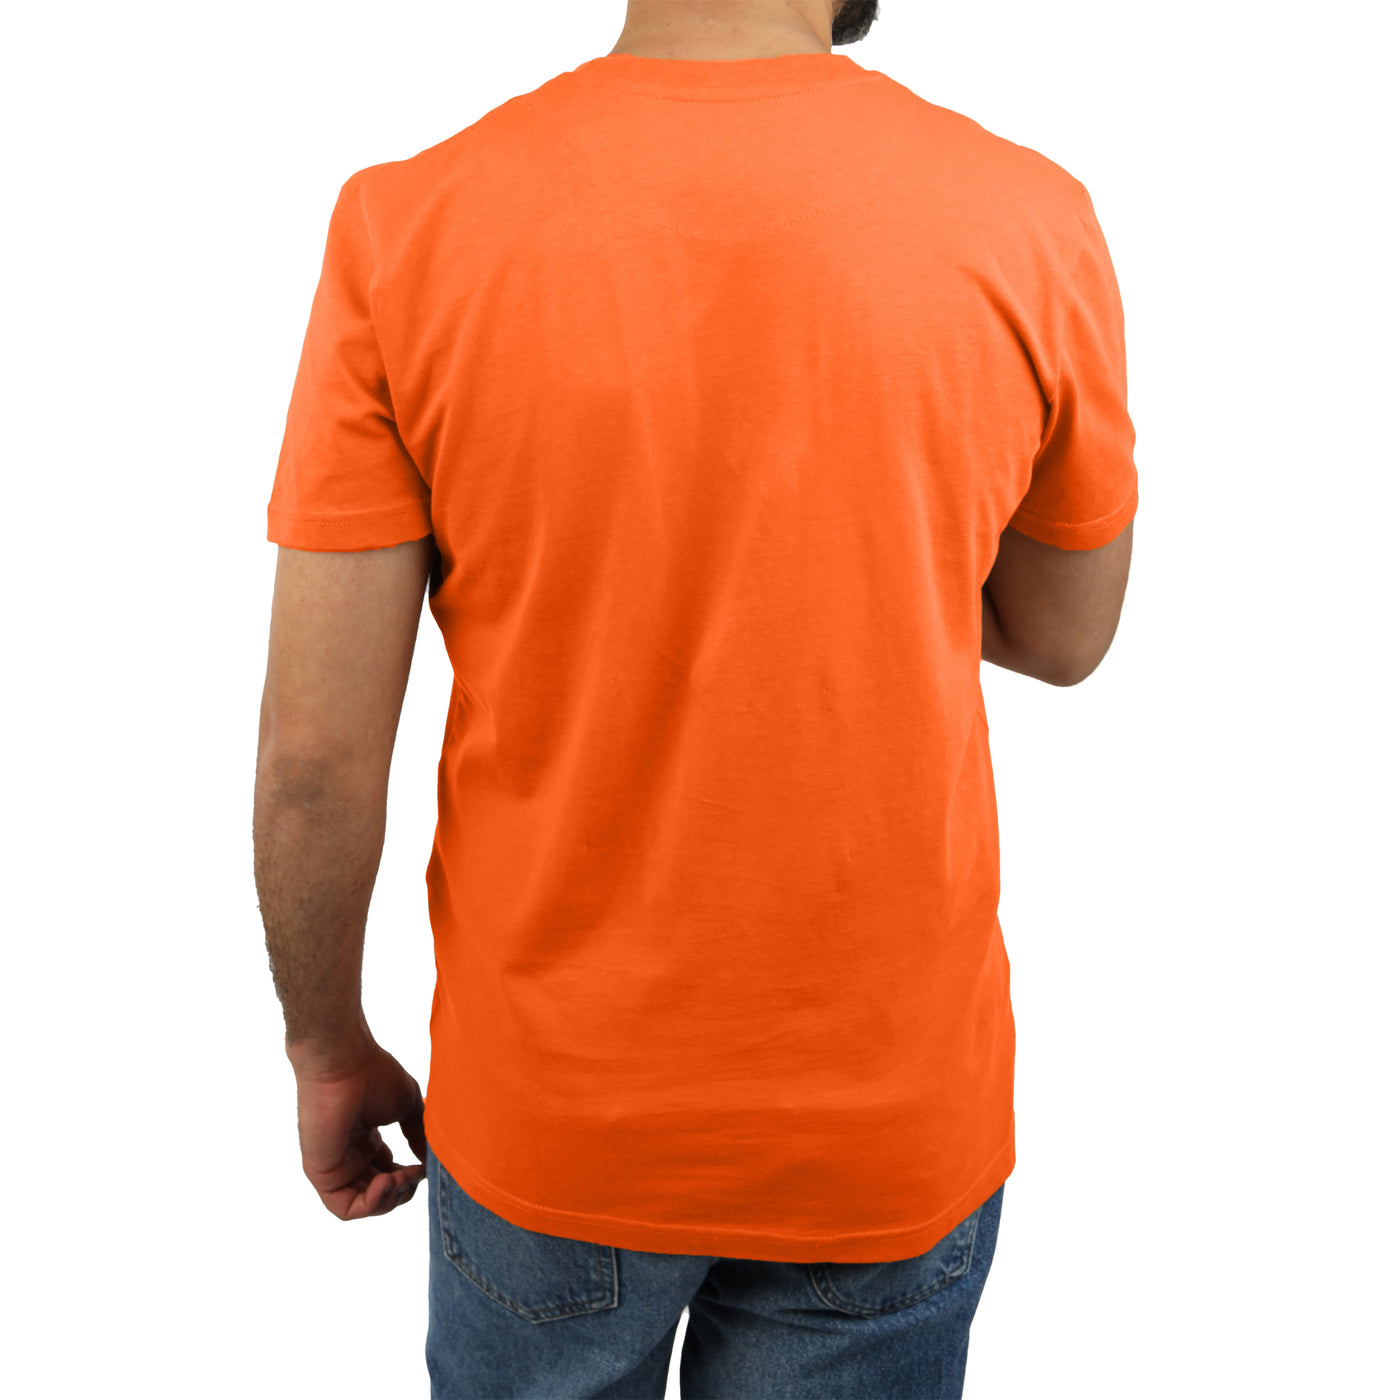 Mandarin-Orange coloured round T-shirt